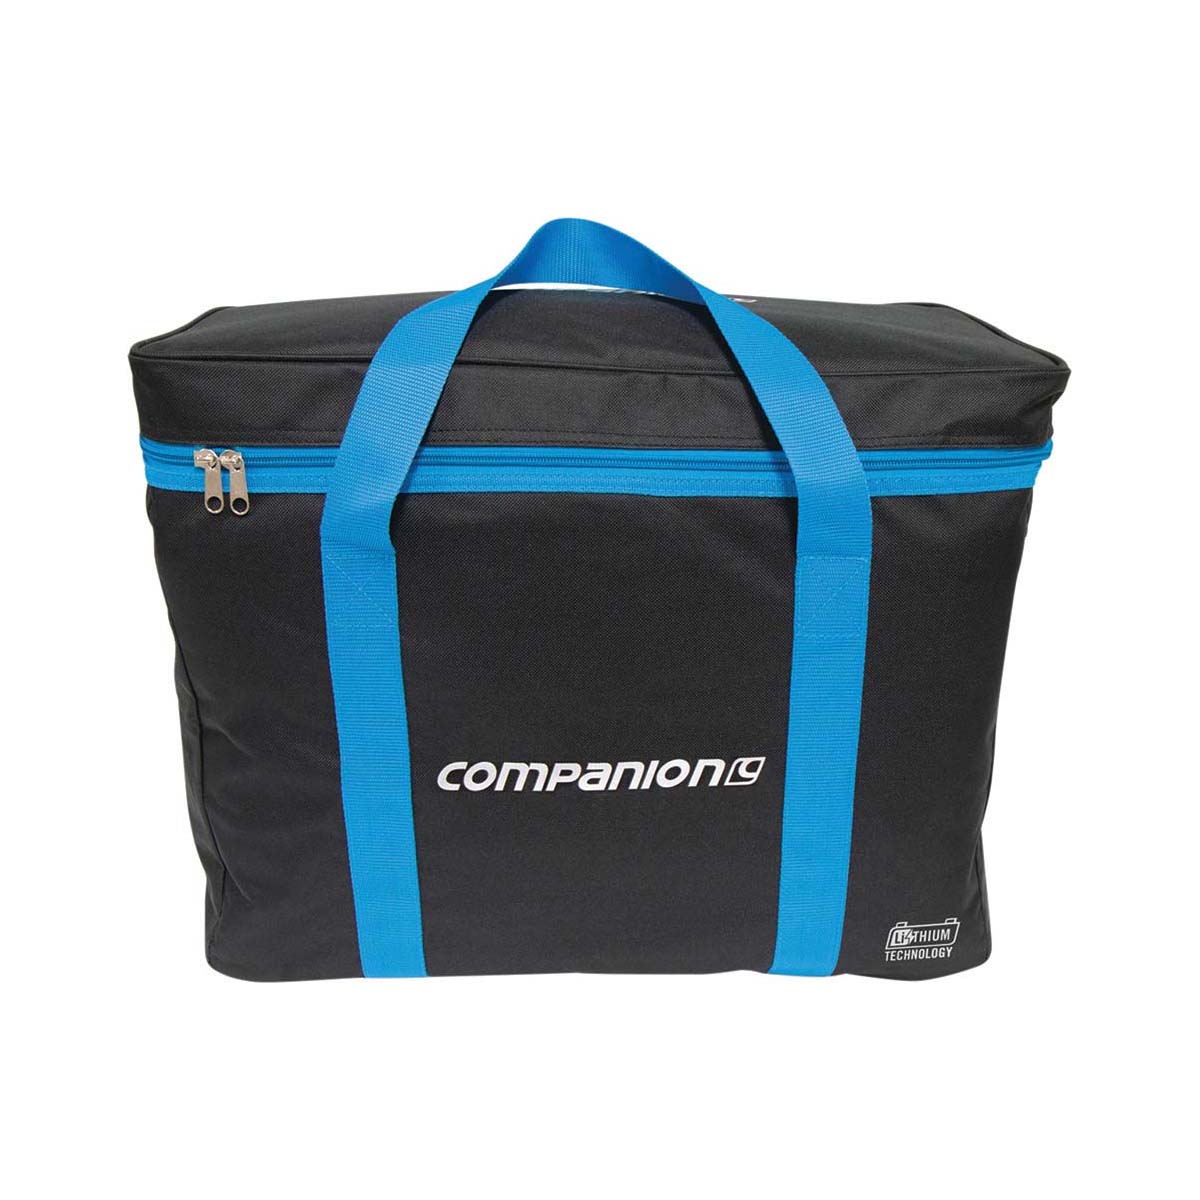 Companion Aquaheat Storage Bag